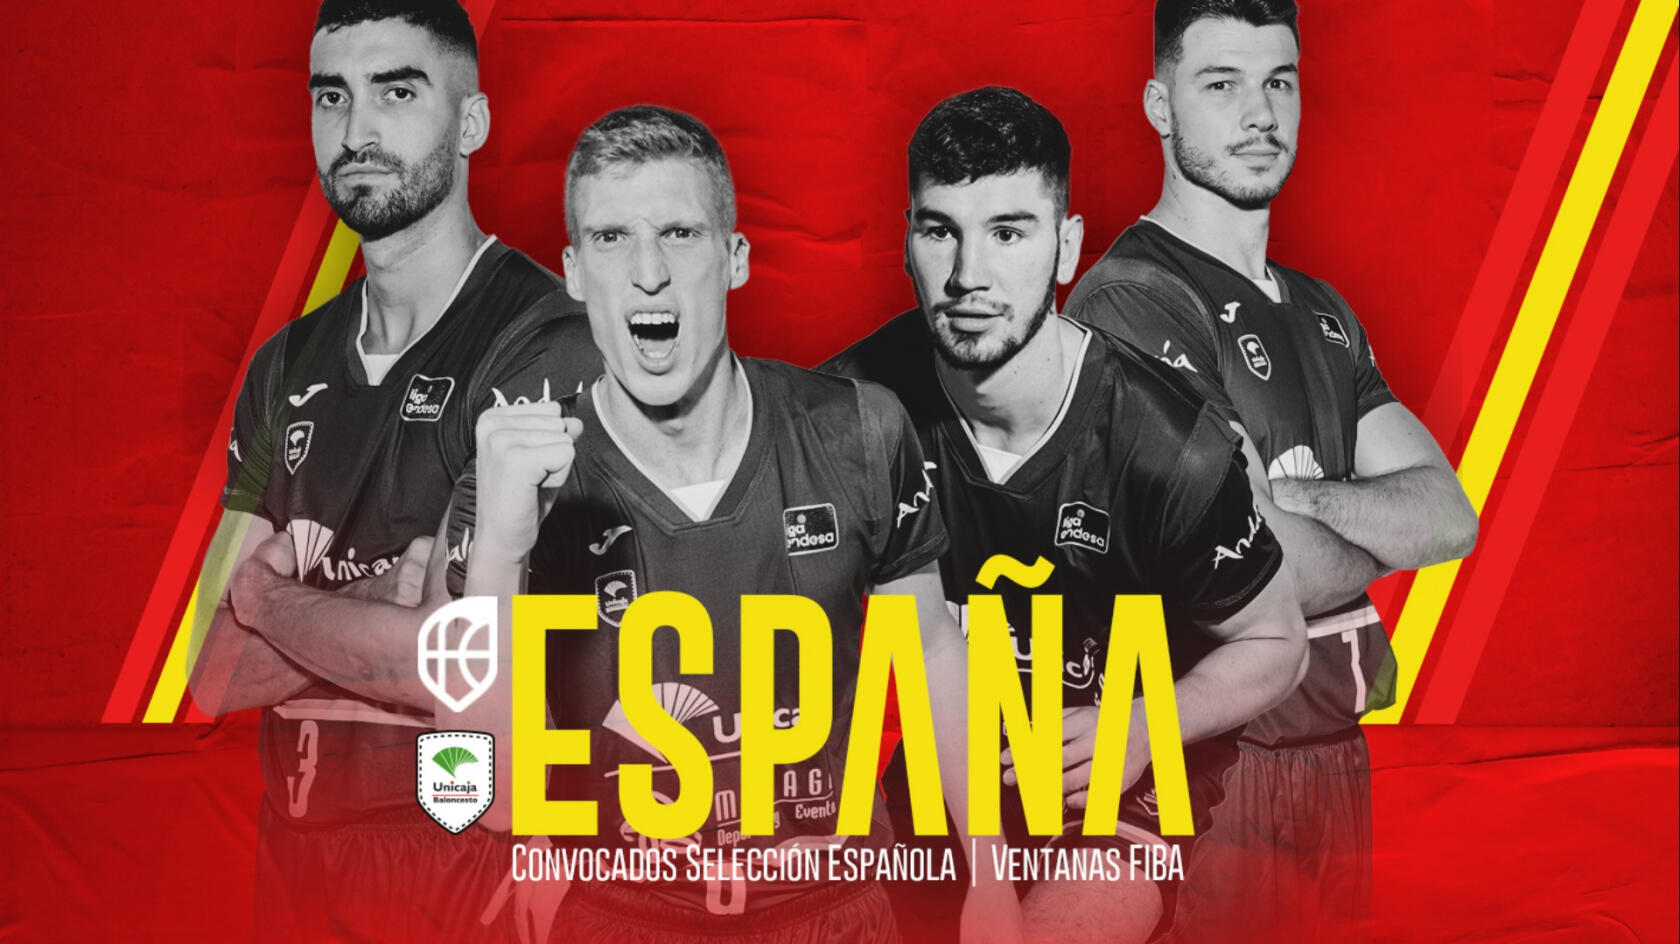 Jaime, Alberto, Brizuela and Barreiro will play with Spain